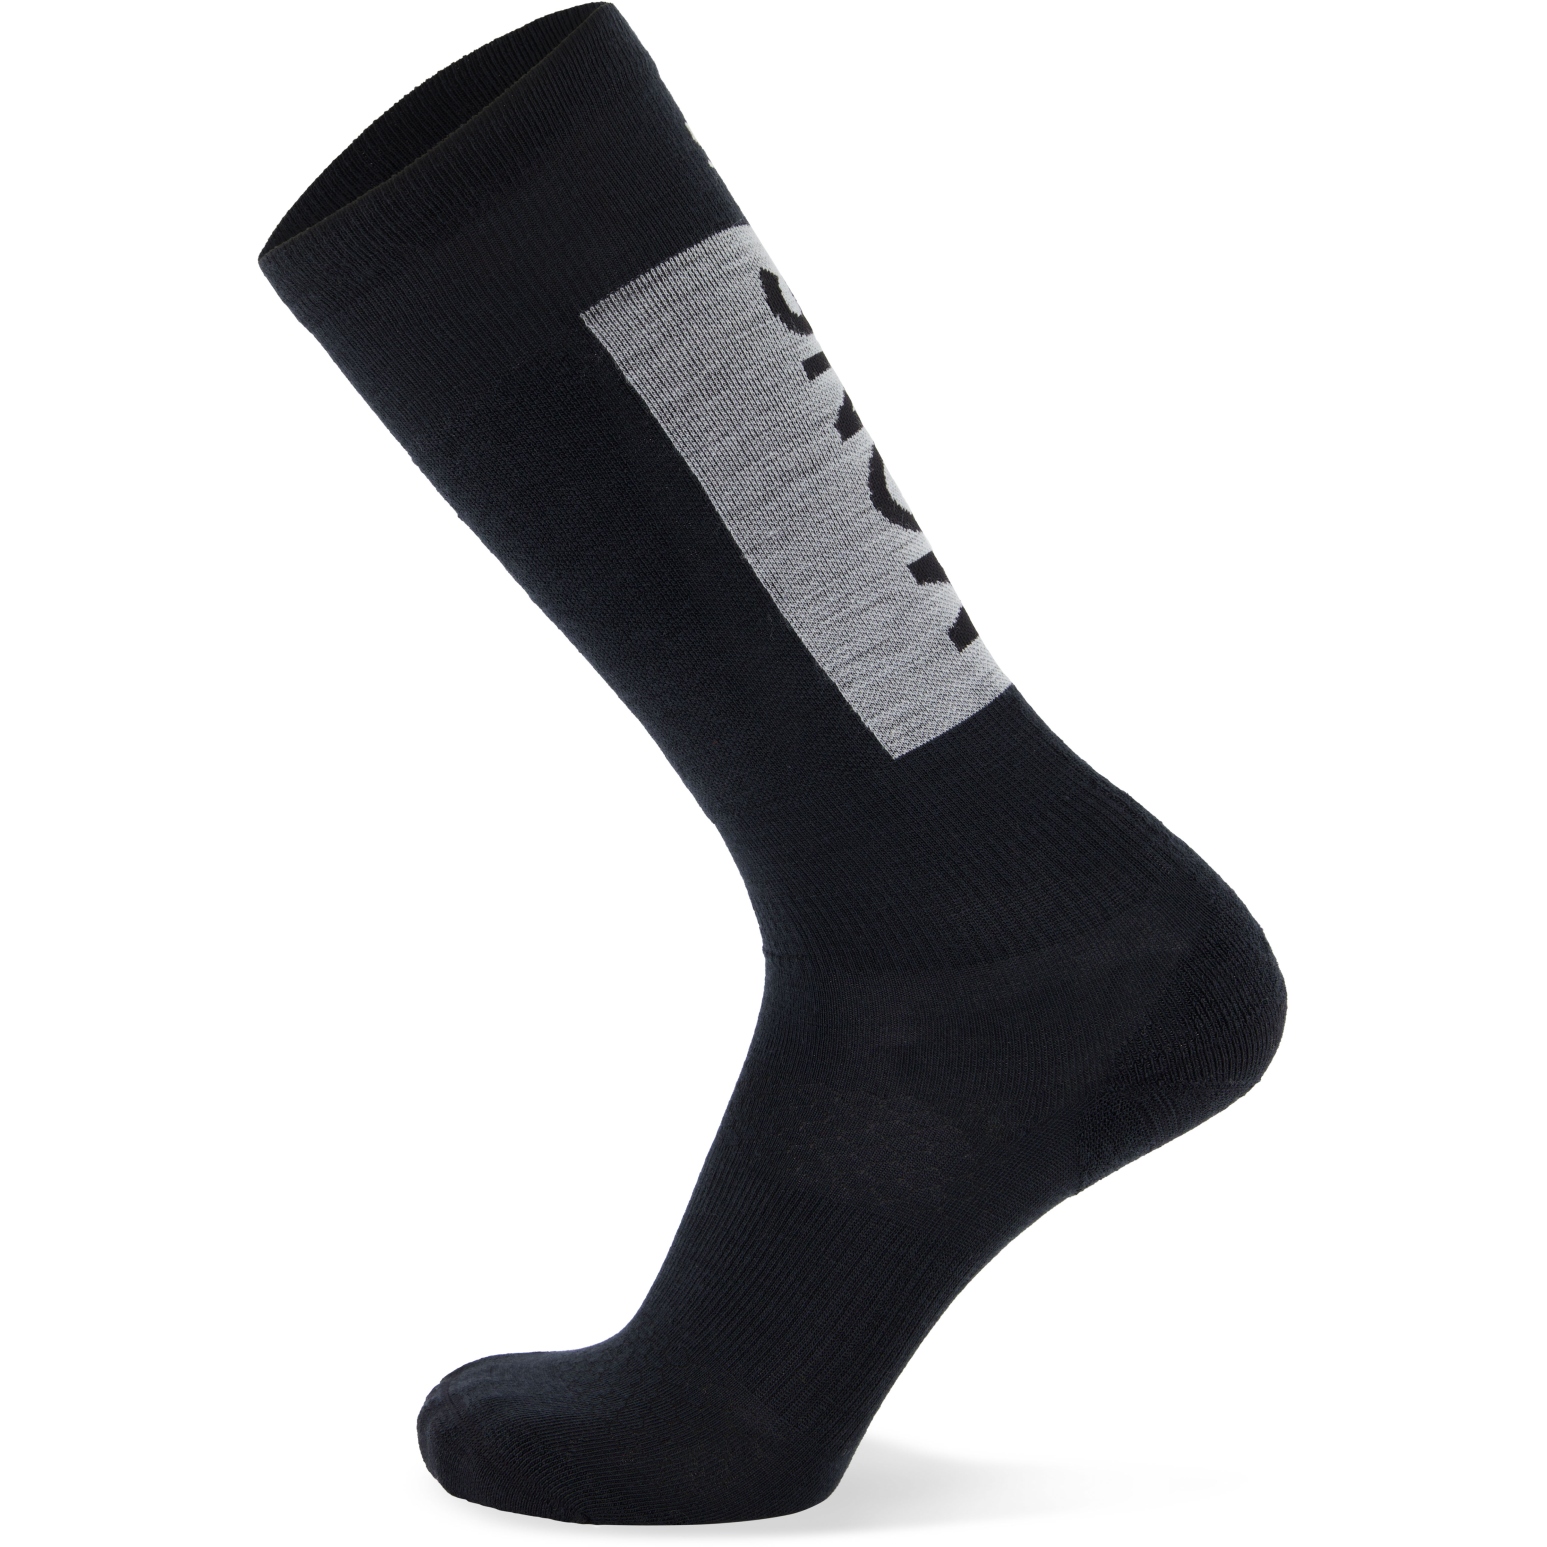 Produktbild von Mons Royale Atlas Merino Snow Socken - schwarz